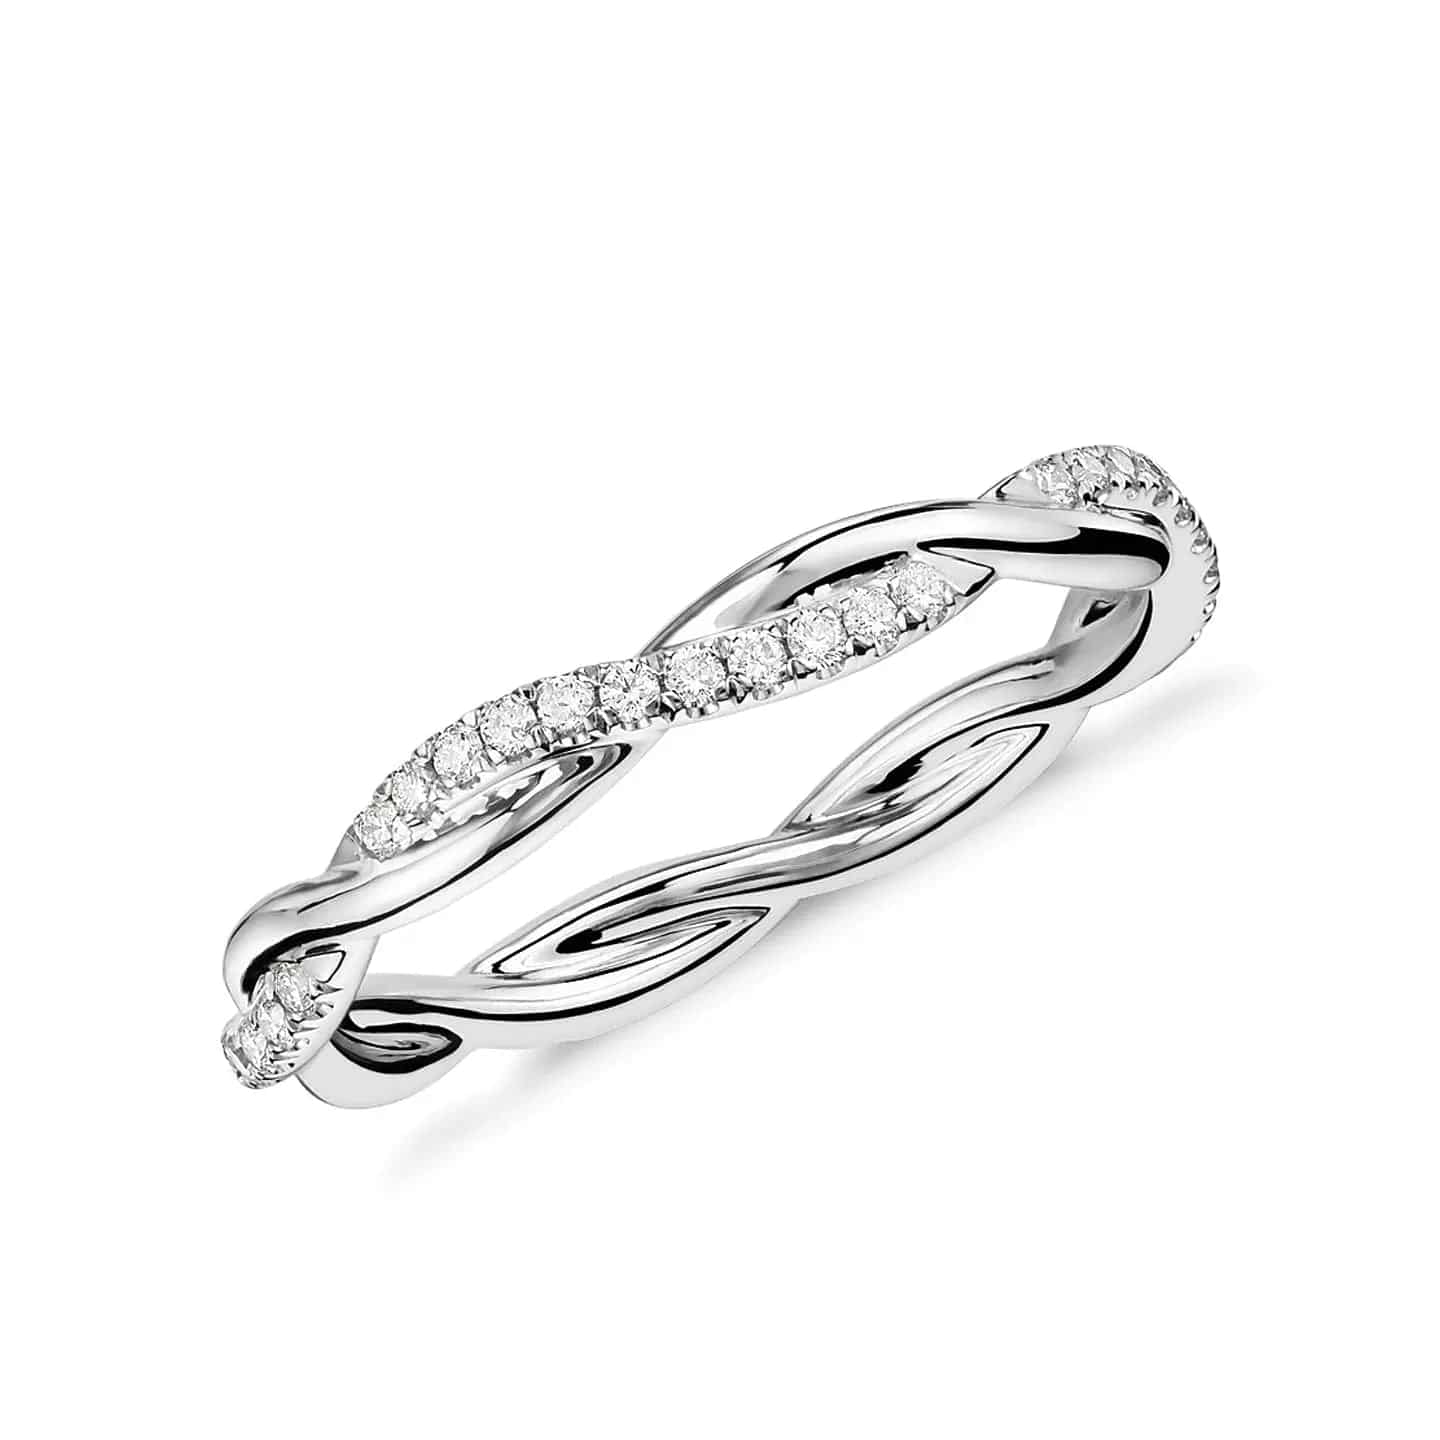 Paul & Joanne Ring Duo - Minimalistic Diamond Rings in Silver - Baza Boutique 